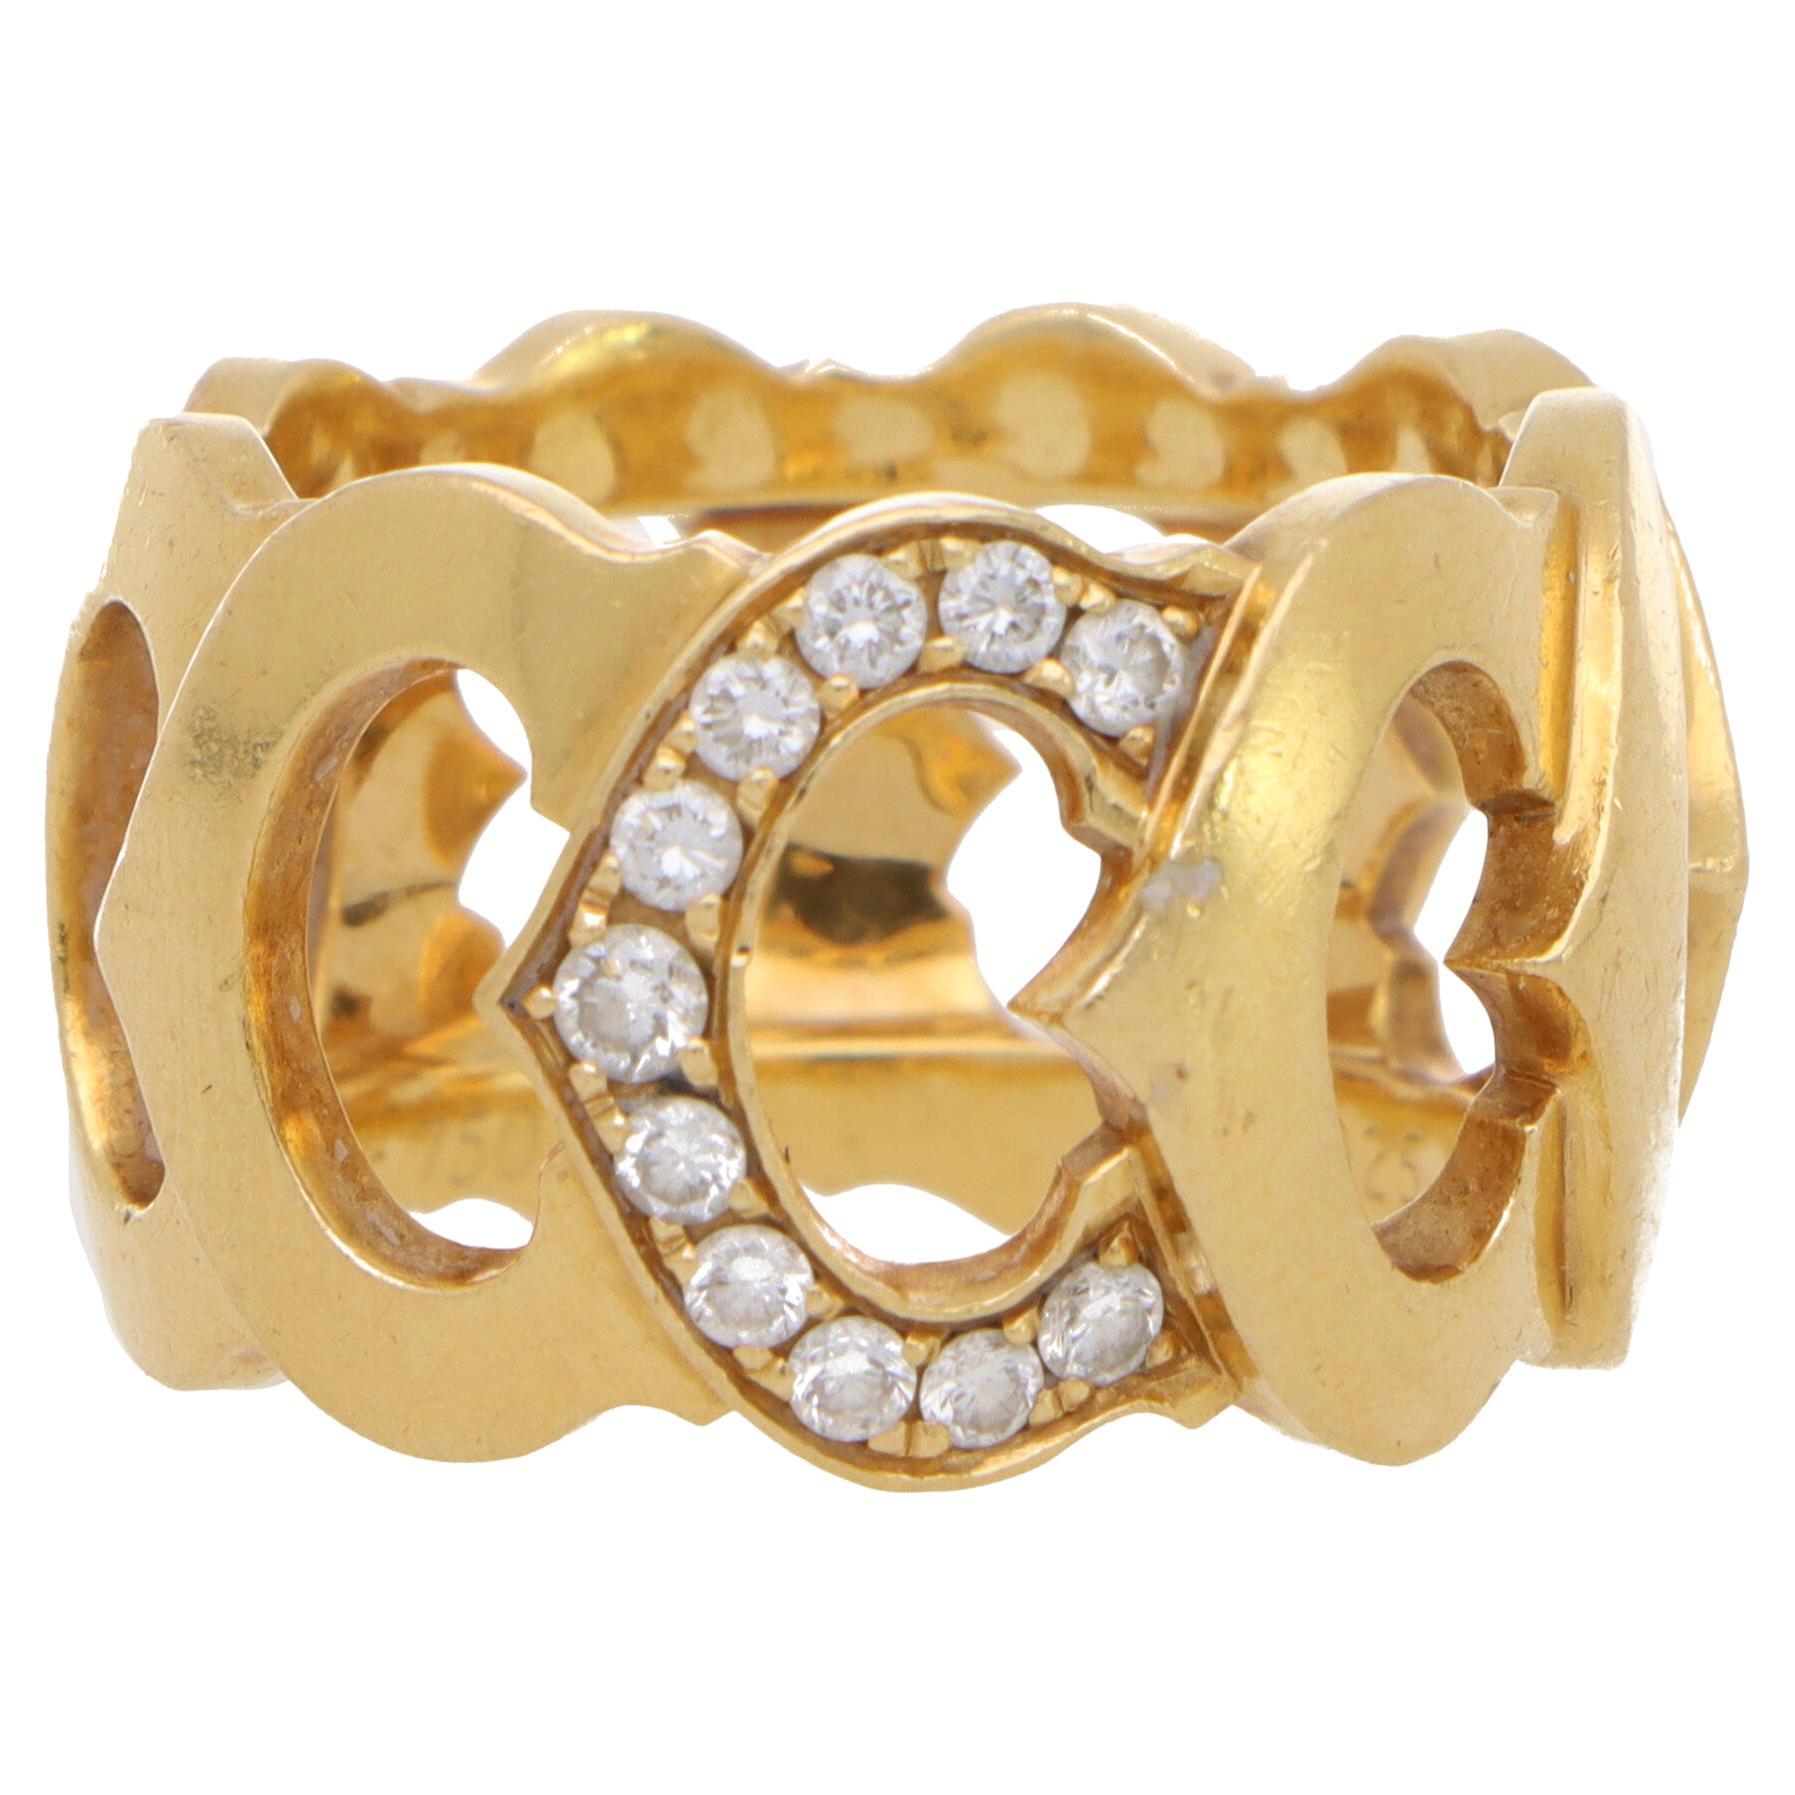 Vintage Cartier ‘C de Cartier’ Diamond Band Ring in 18k Yellow Gold